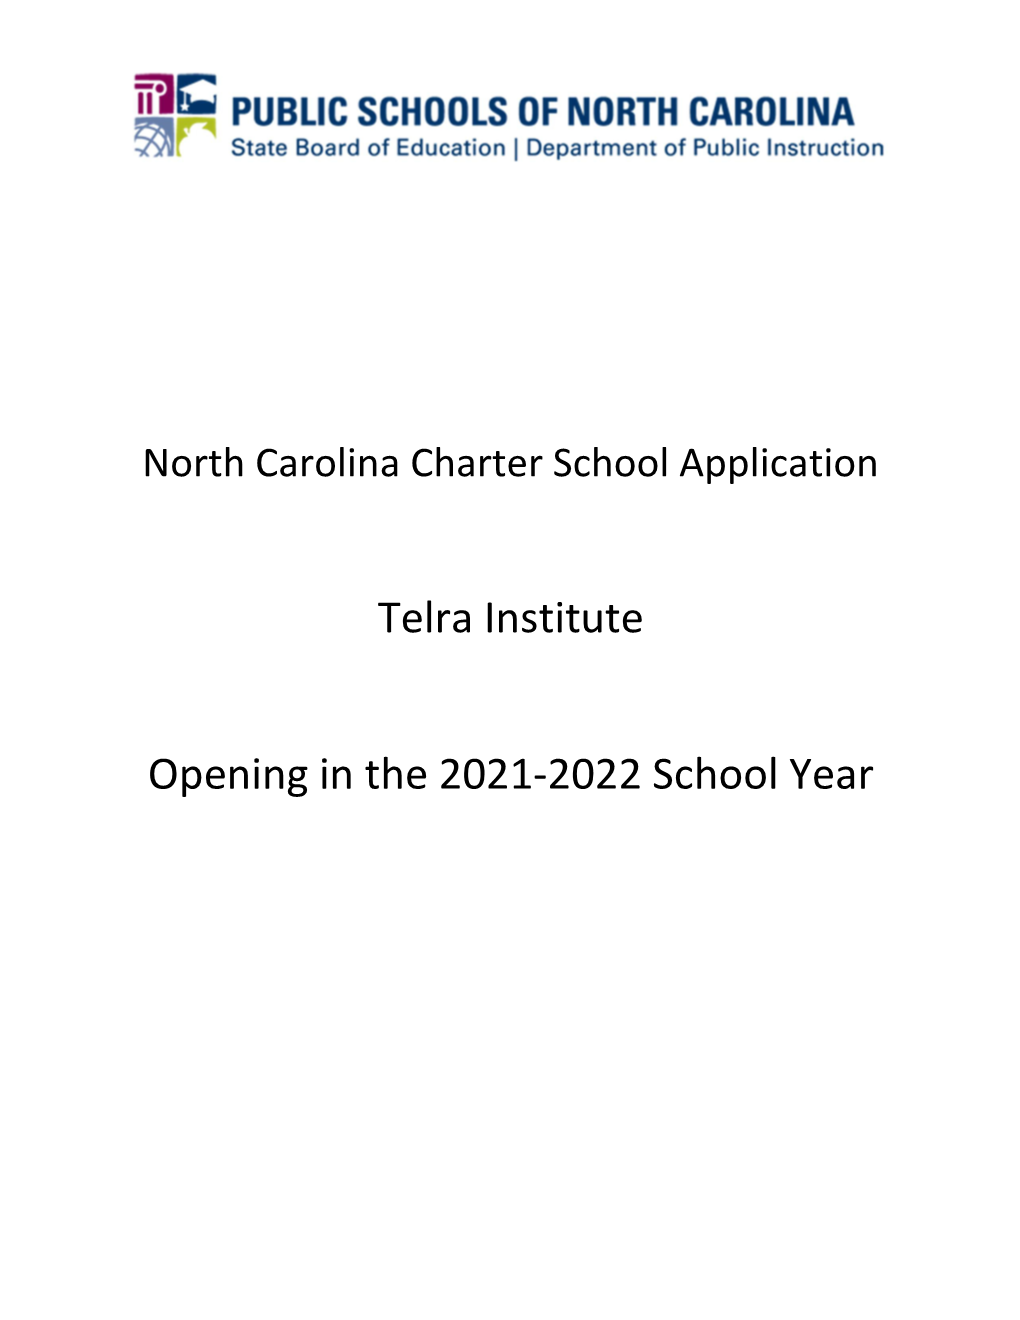 Telra Institute Opening in the 2021-2022 School Year